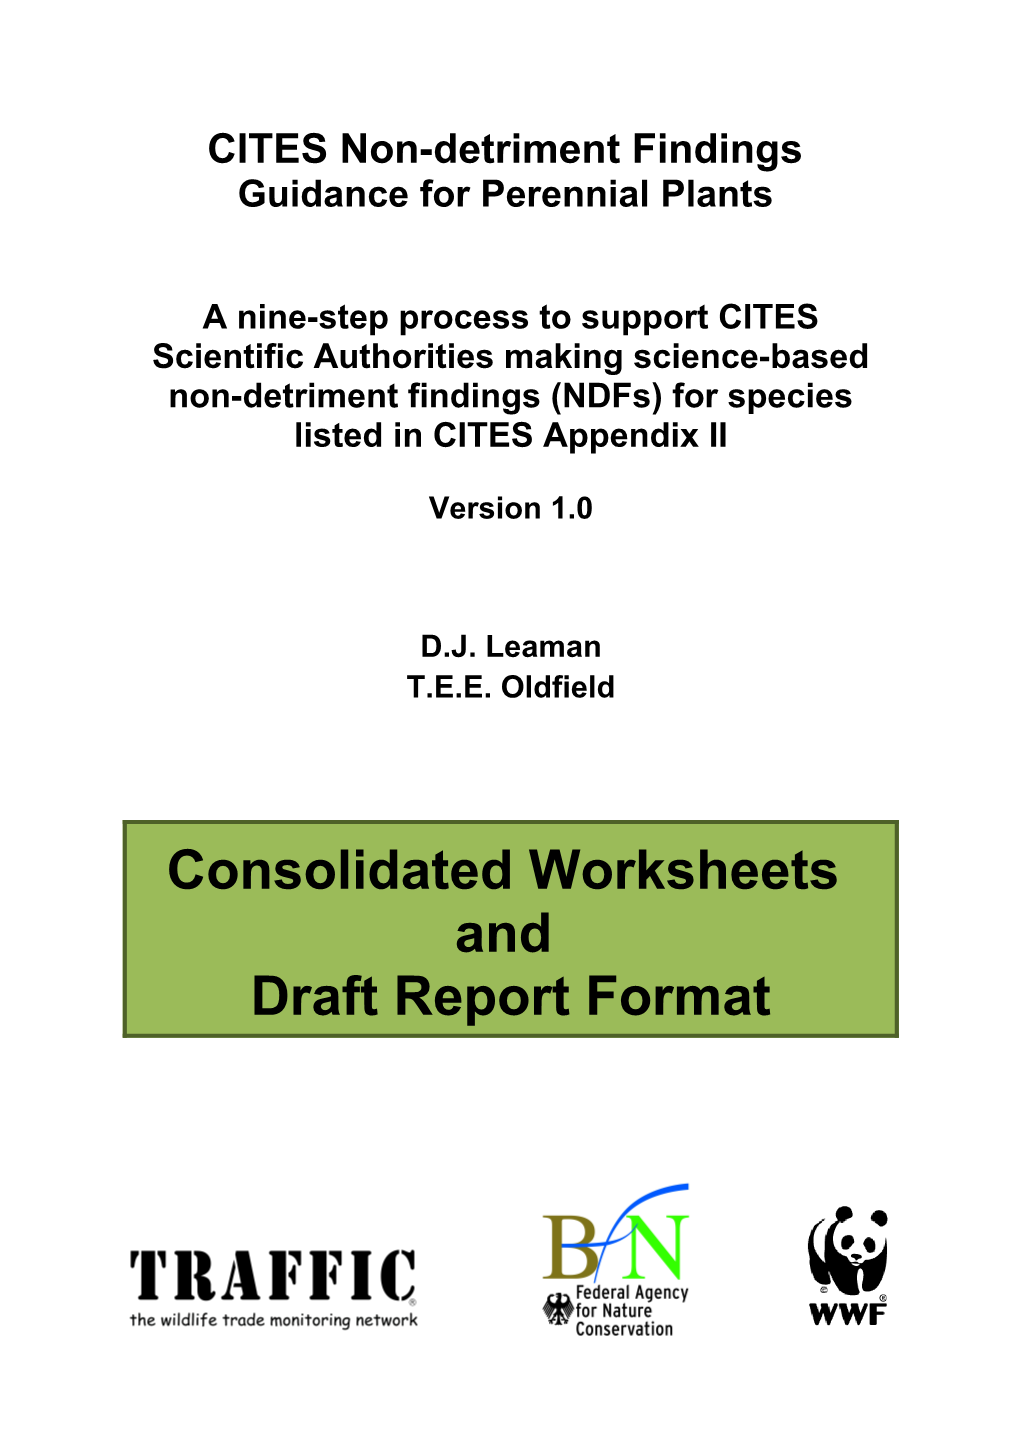 CITES Non-Detriment Findings (NDF)